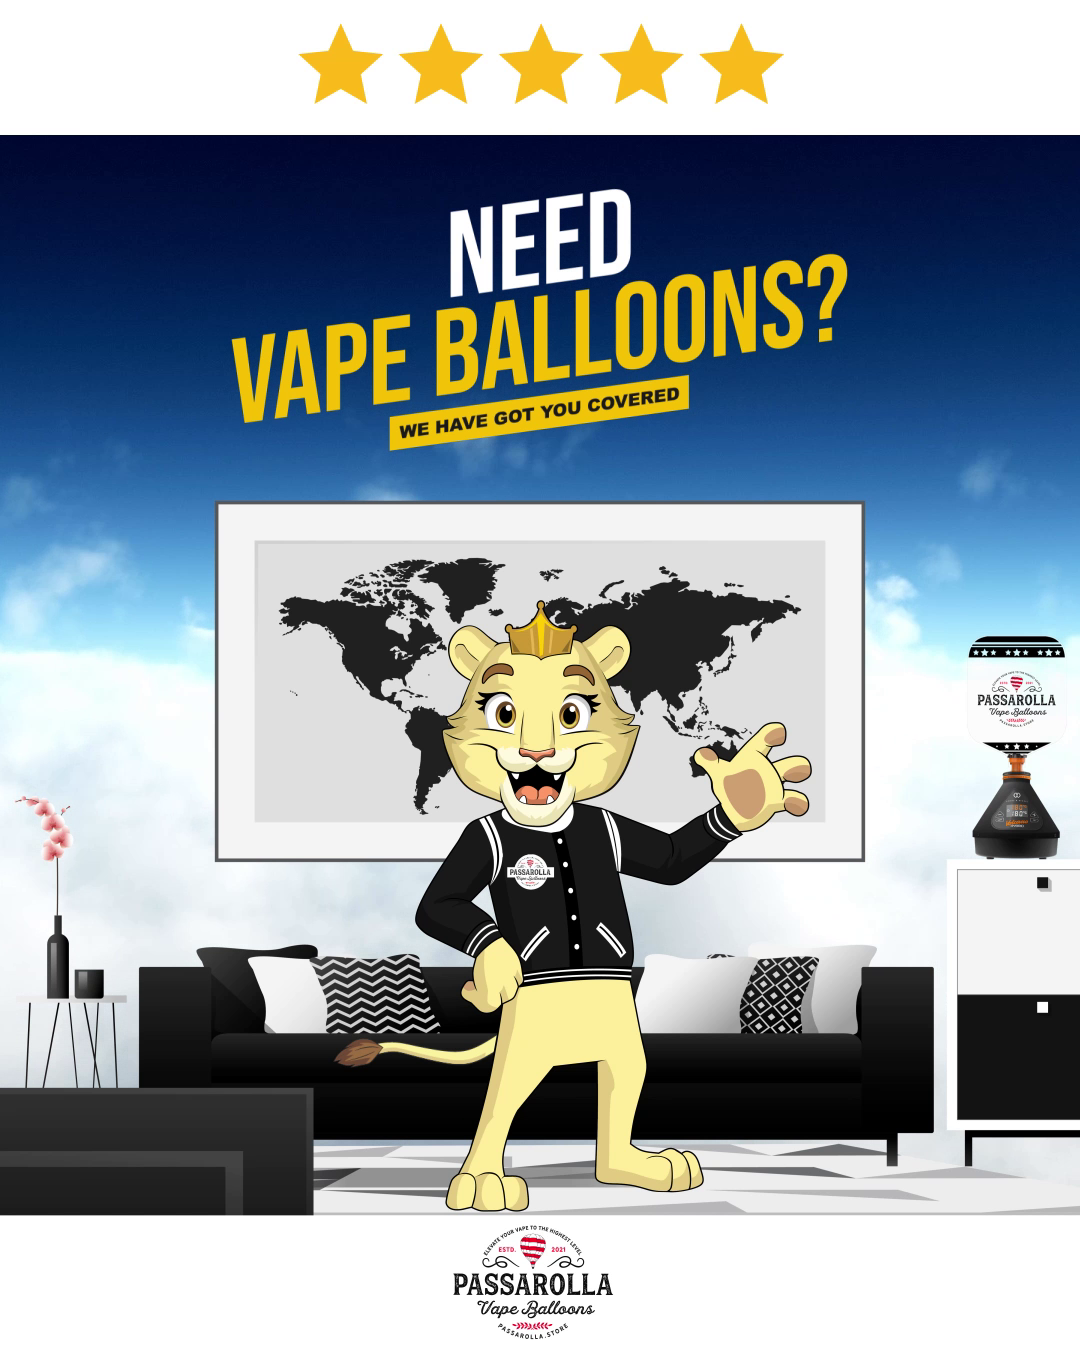 Need Vape Balloons for the VOLCANO vaporizer?